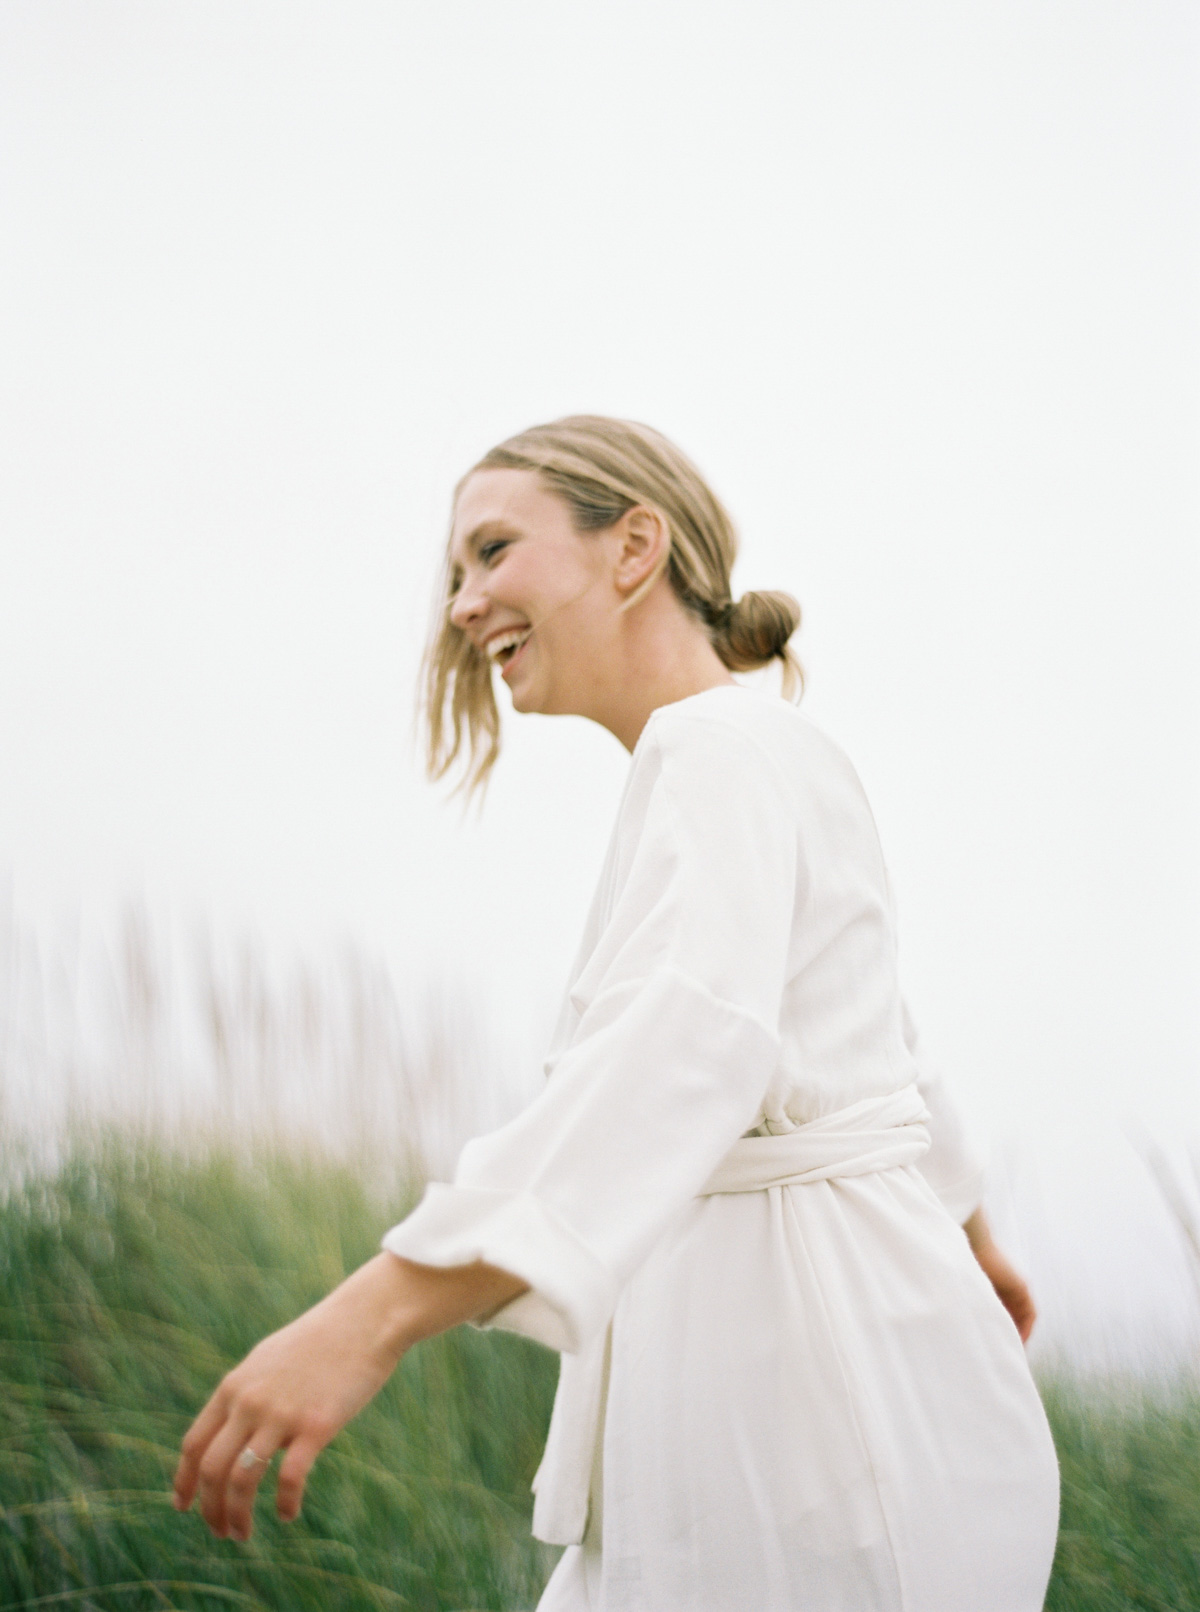 Portrait of woman in white dress near sand dunes